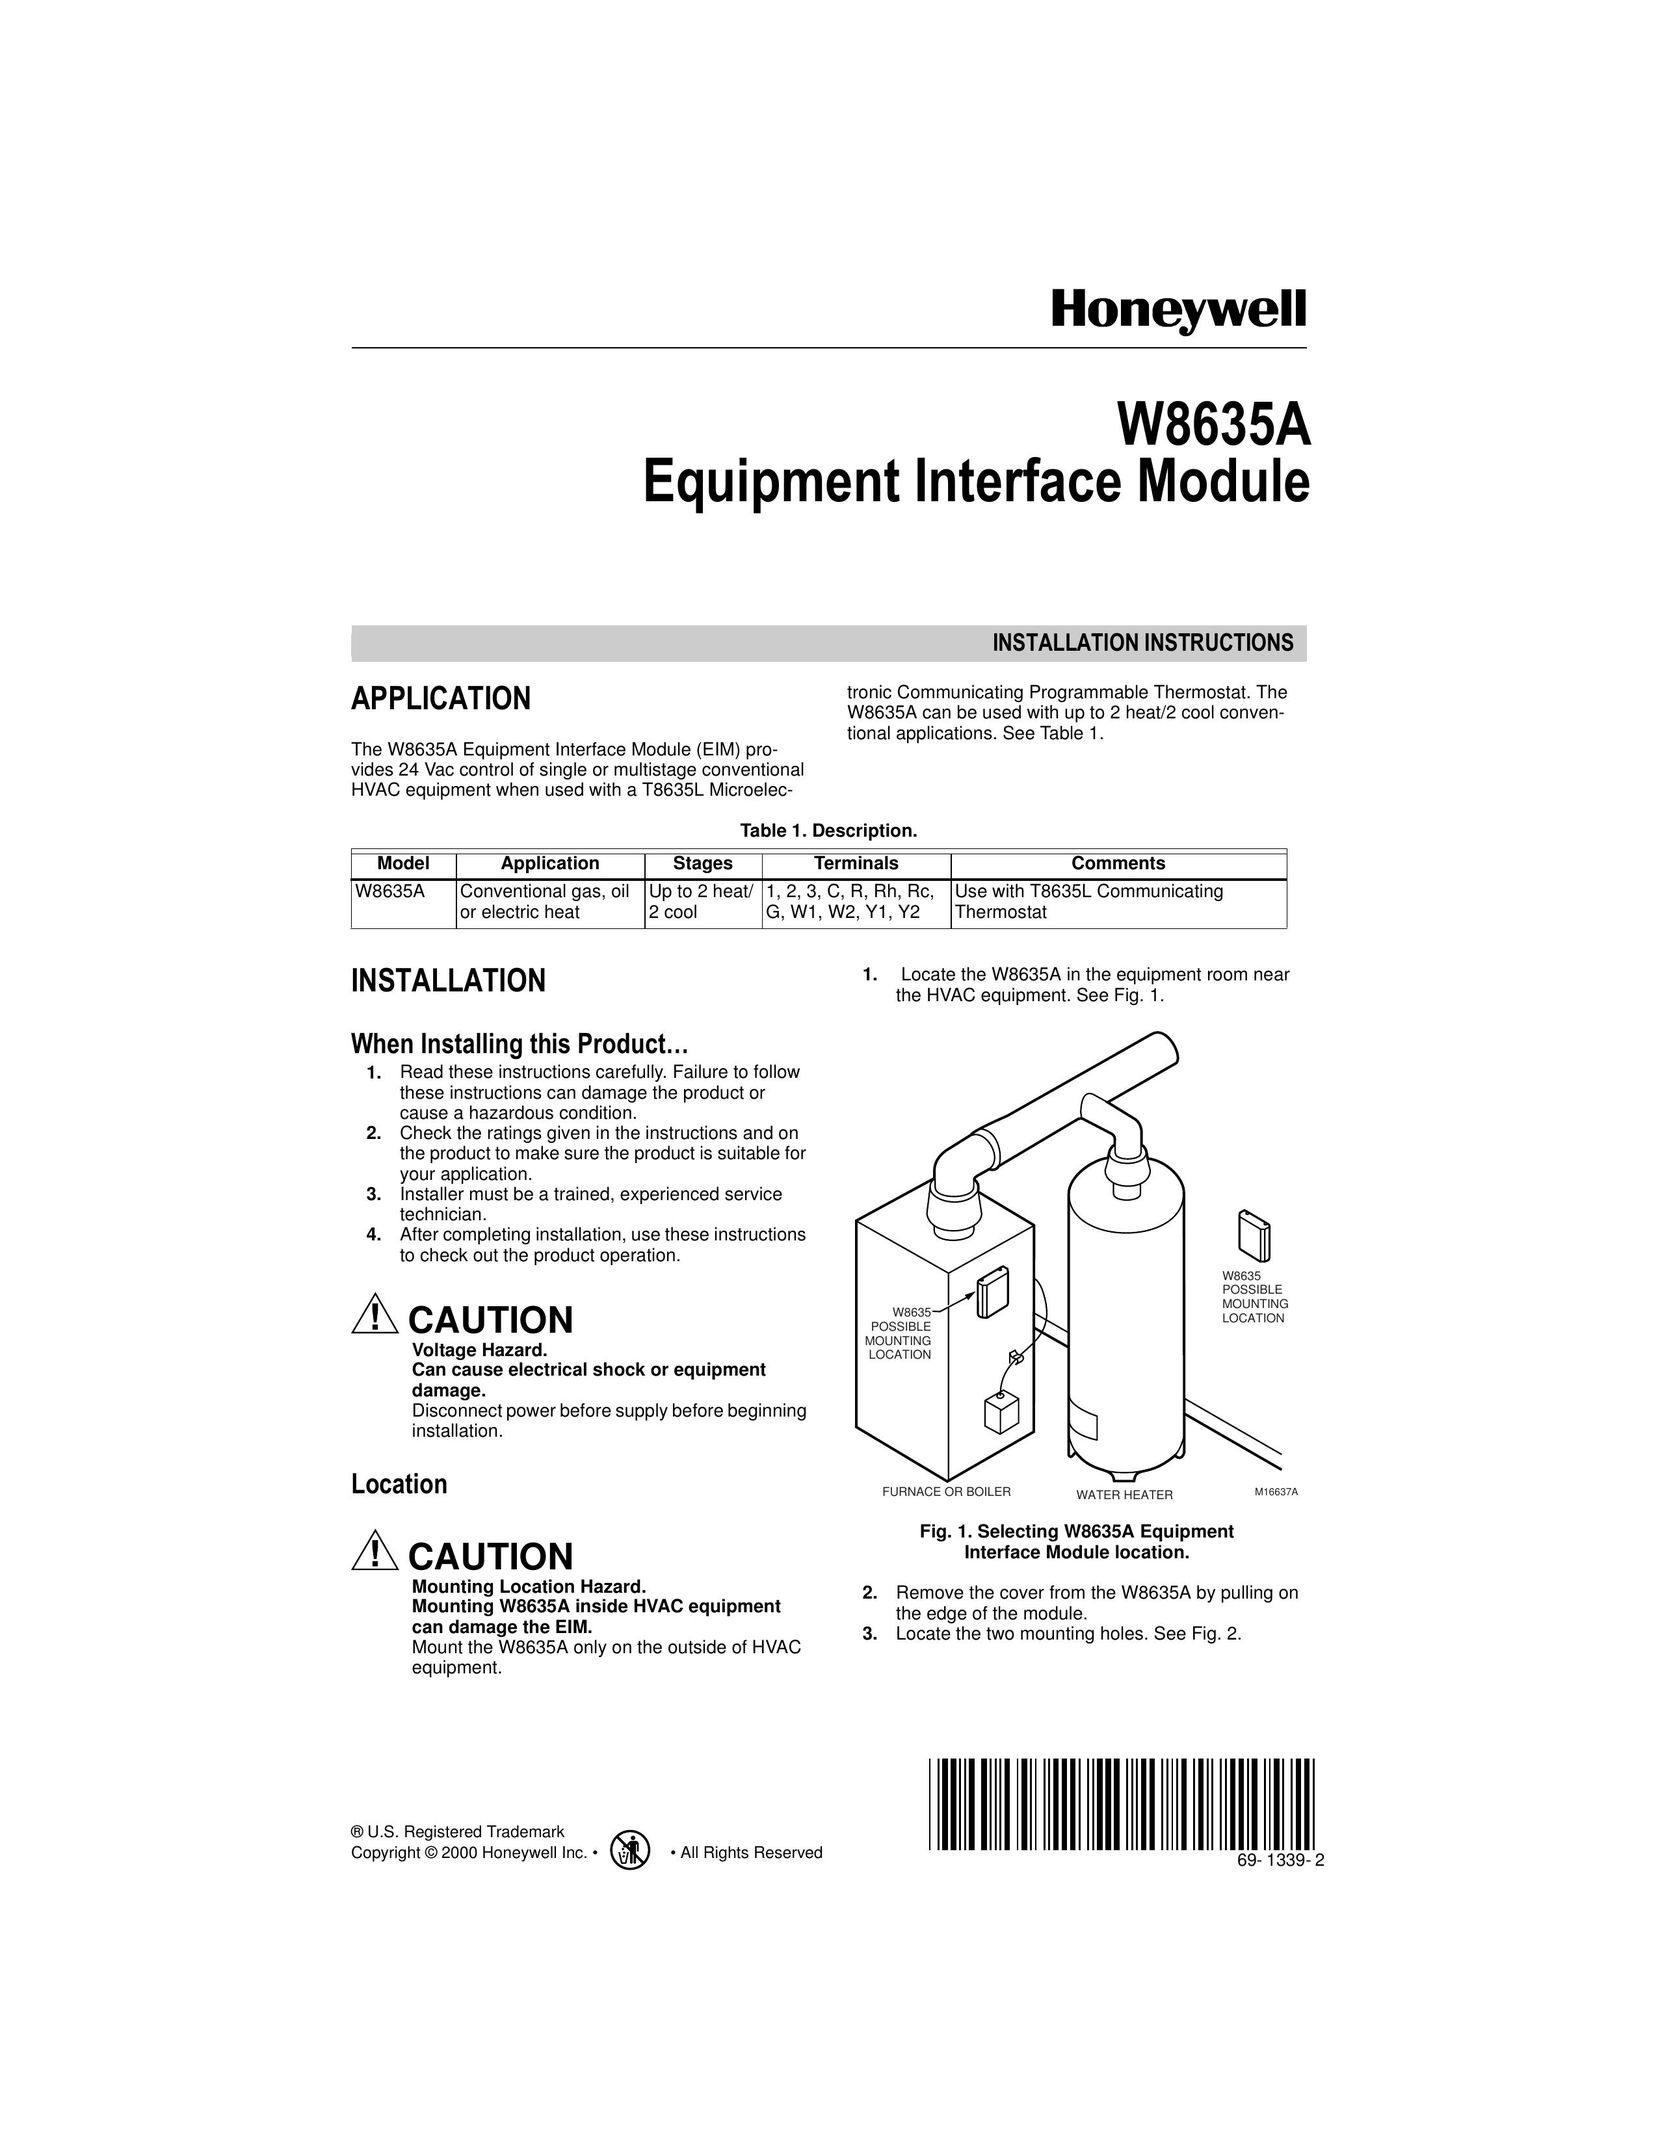 Honeywell W8635A Water Heater User Manual